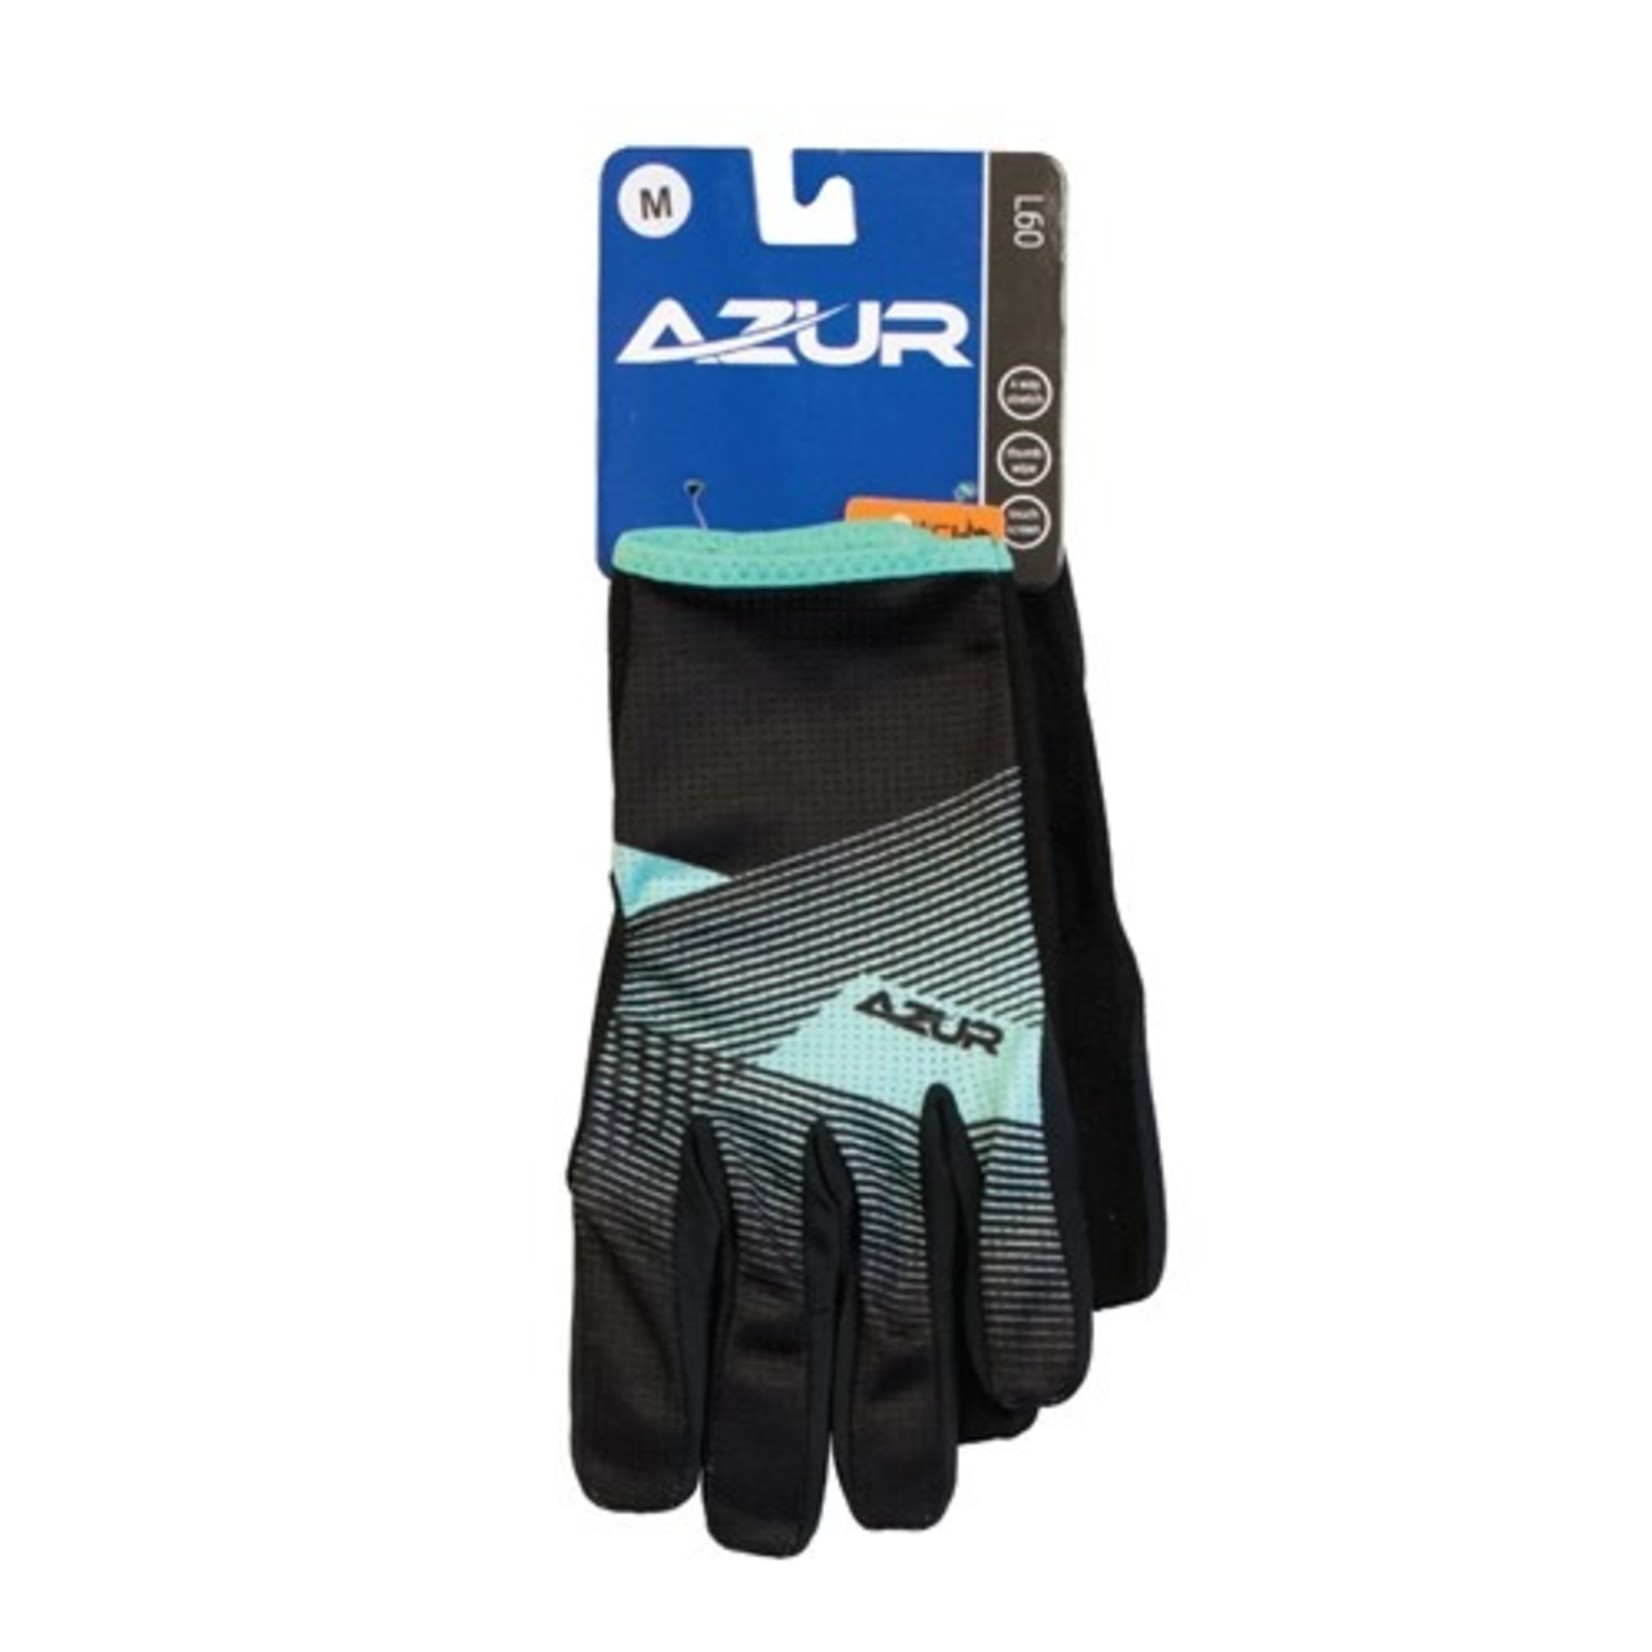 Azur Azur Bike/Cycling Lightweight Gloves - L60 Series - Breathable - Mint - XX-Small